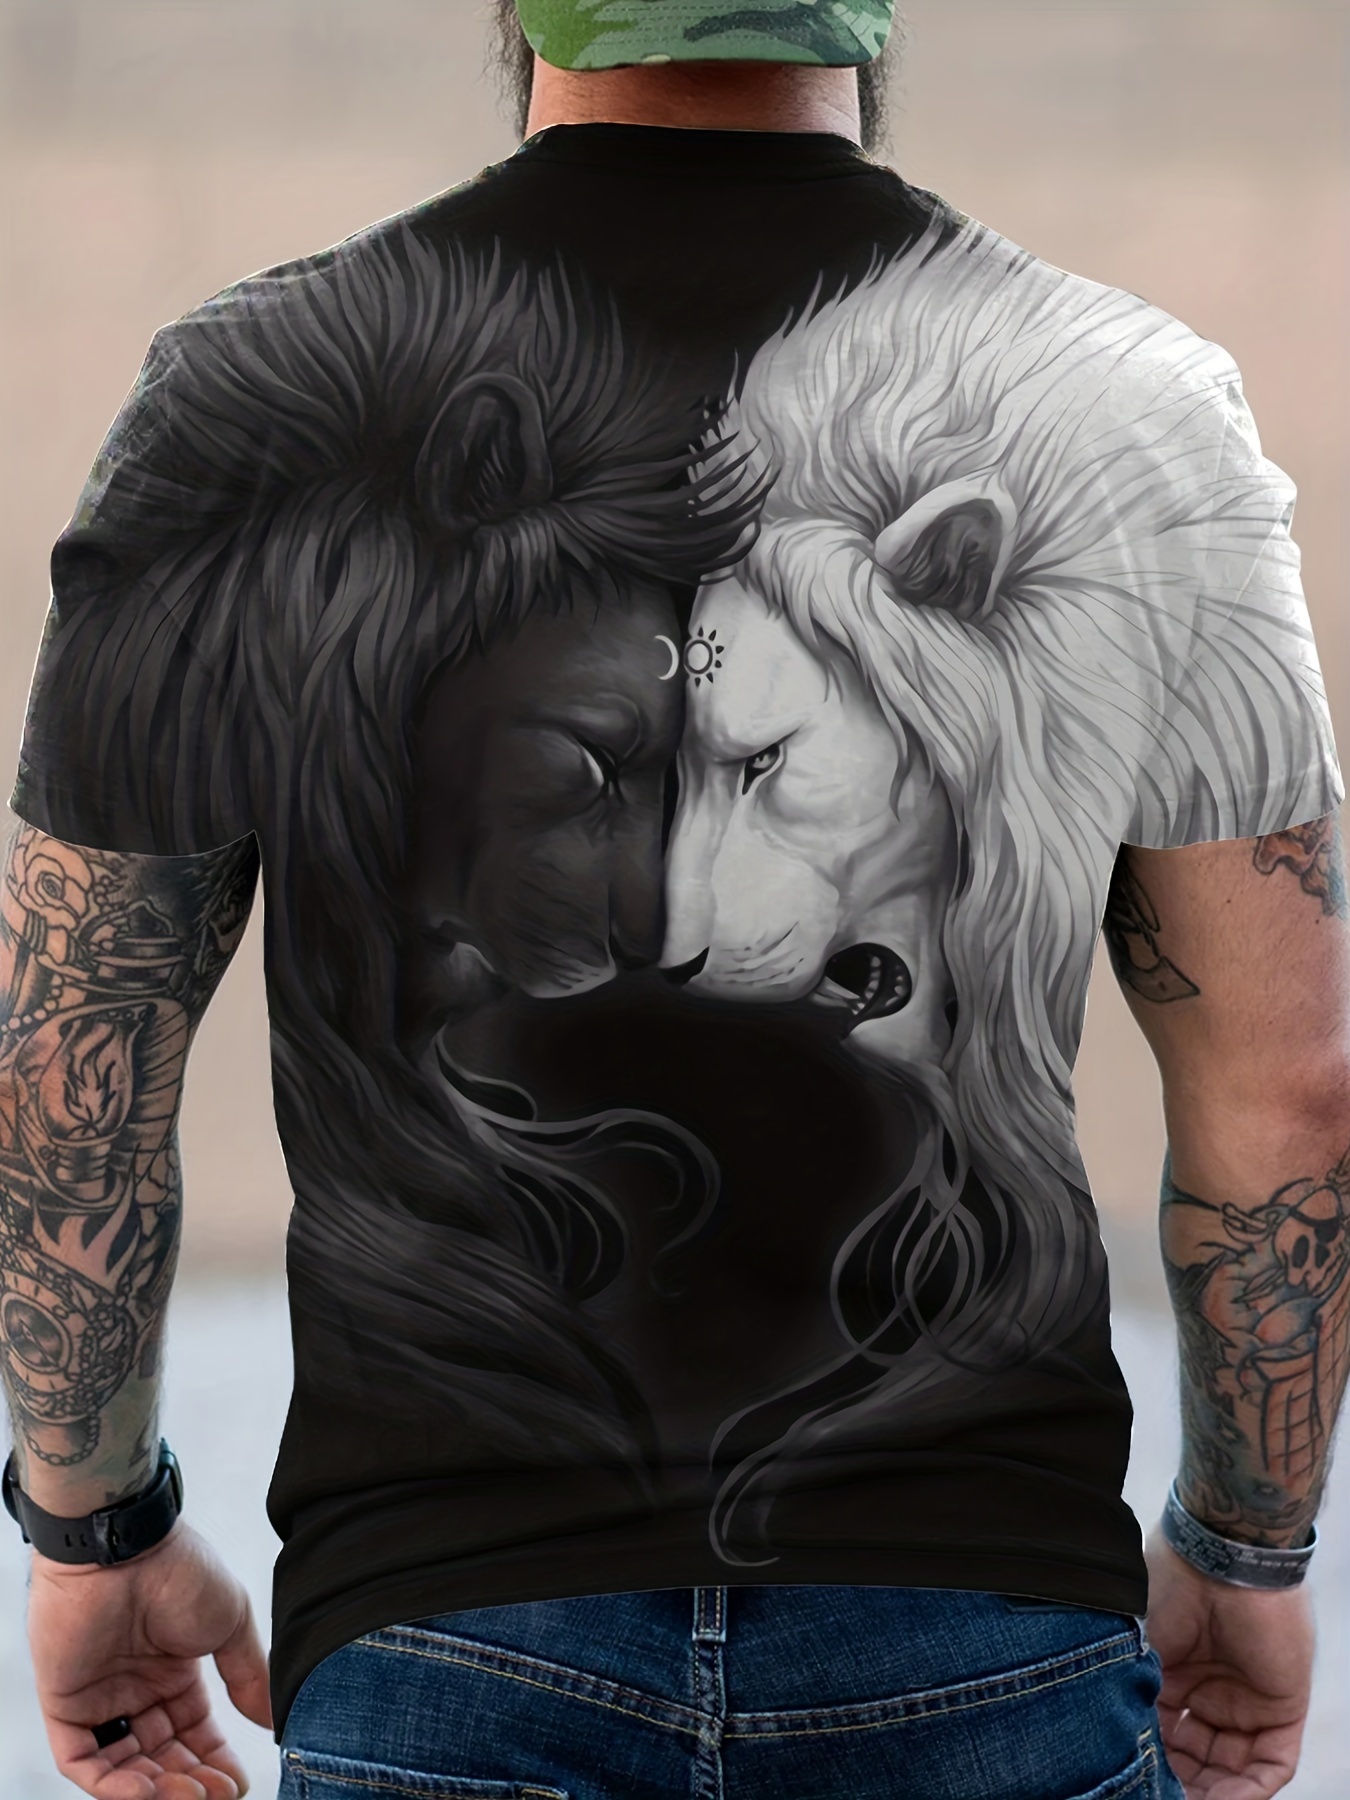 Men 3D Muscle Tattoo Print T-Shirt Short Sleeve Digital Printing T Shirt US